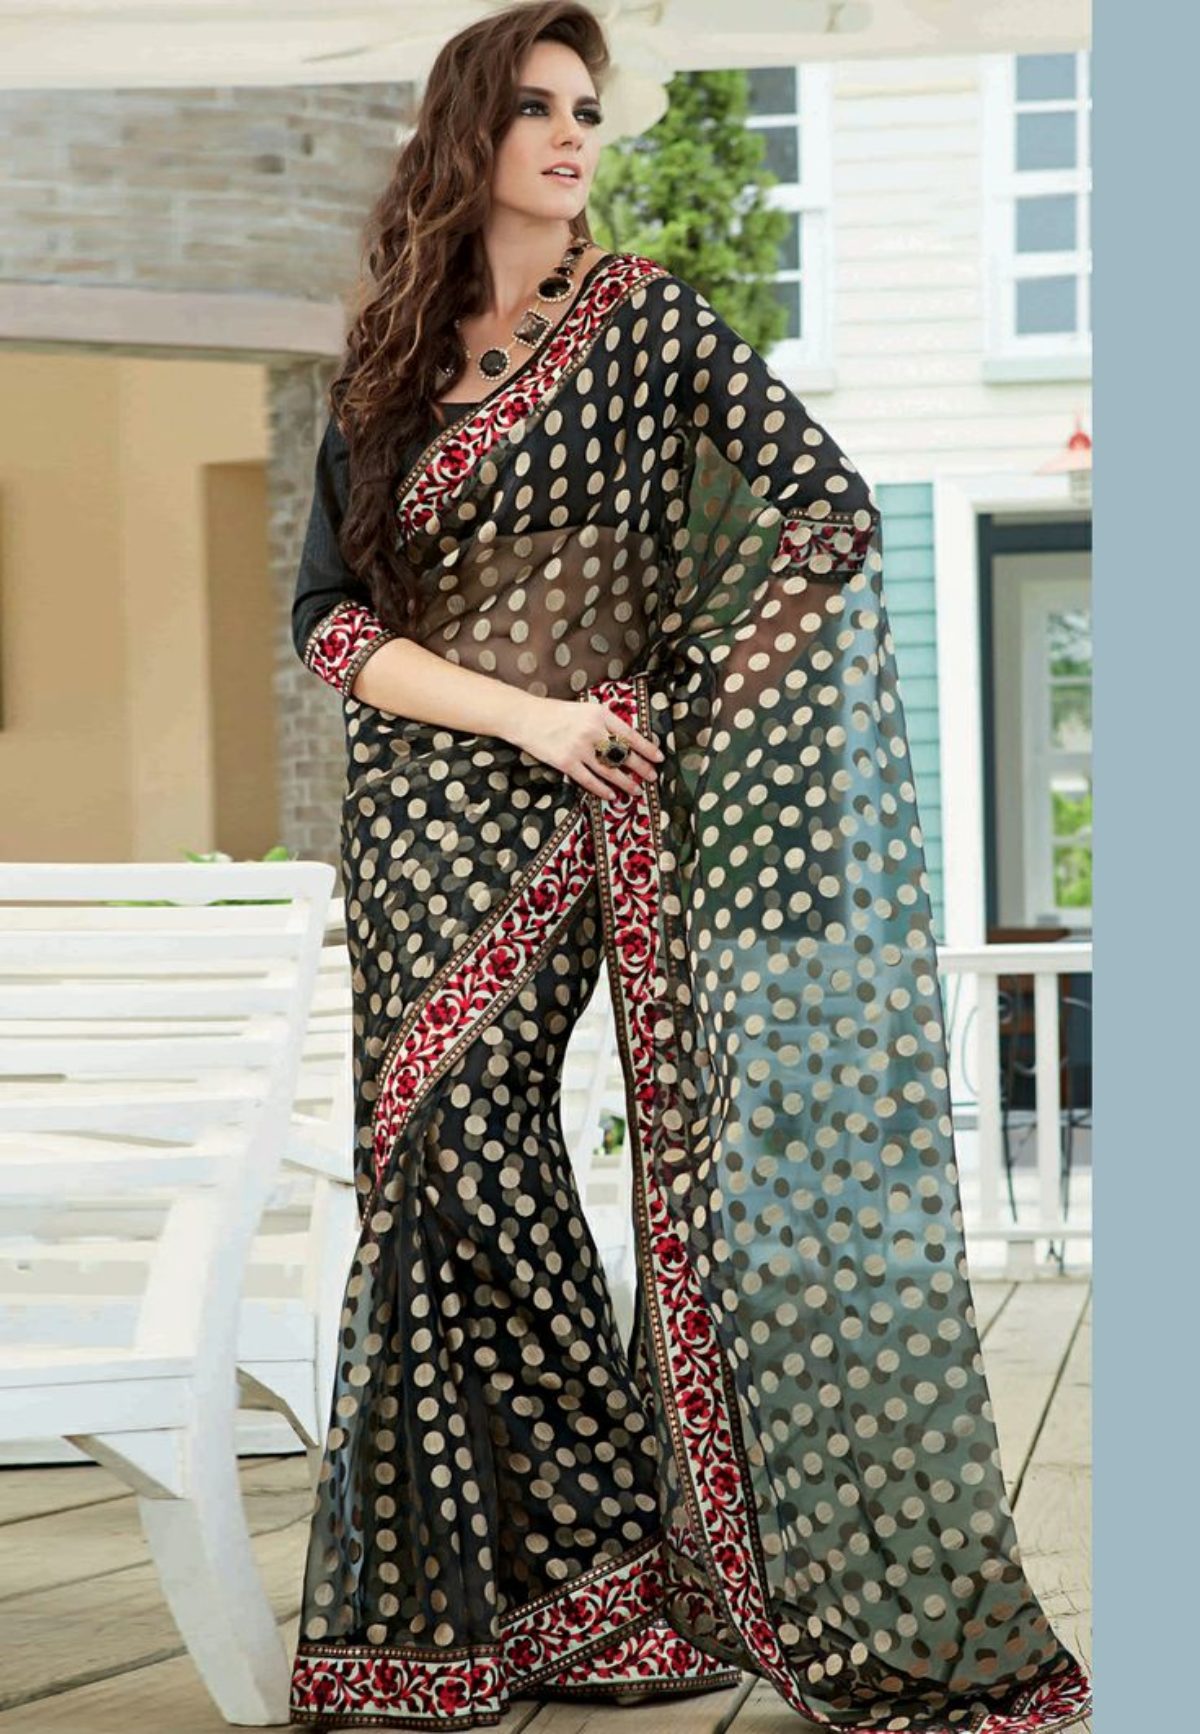 Designer Fancy Saree below ₹500: Buy Cotton, Crepe, Silk, Net & Georgette |  Looksgud.in